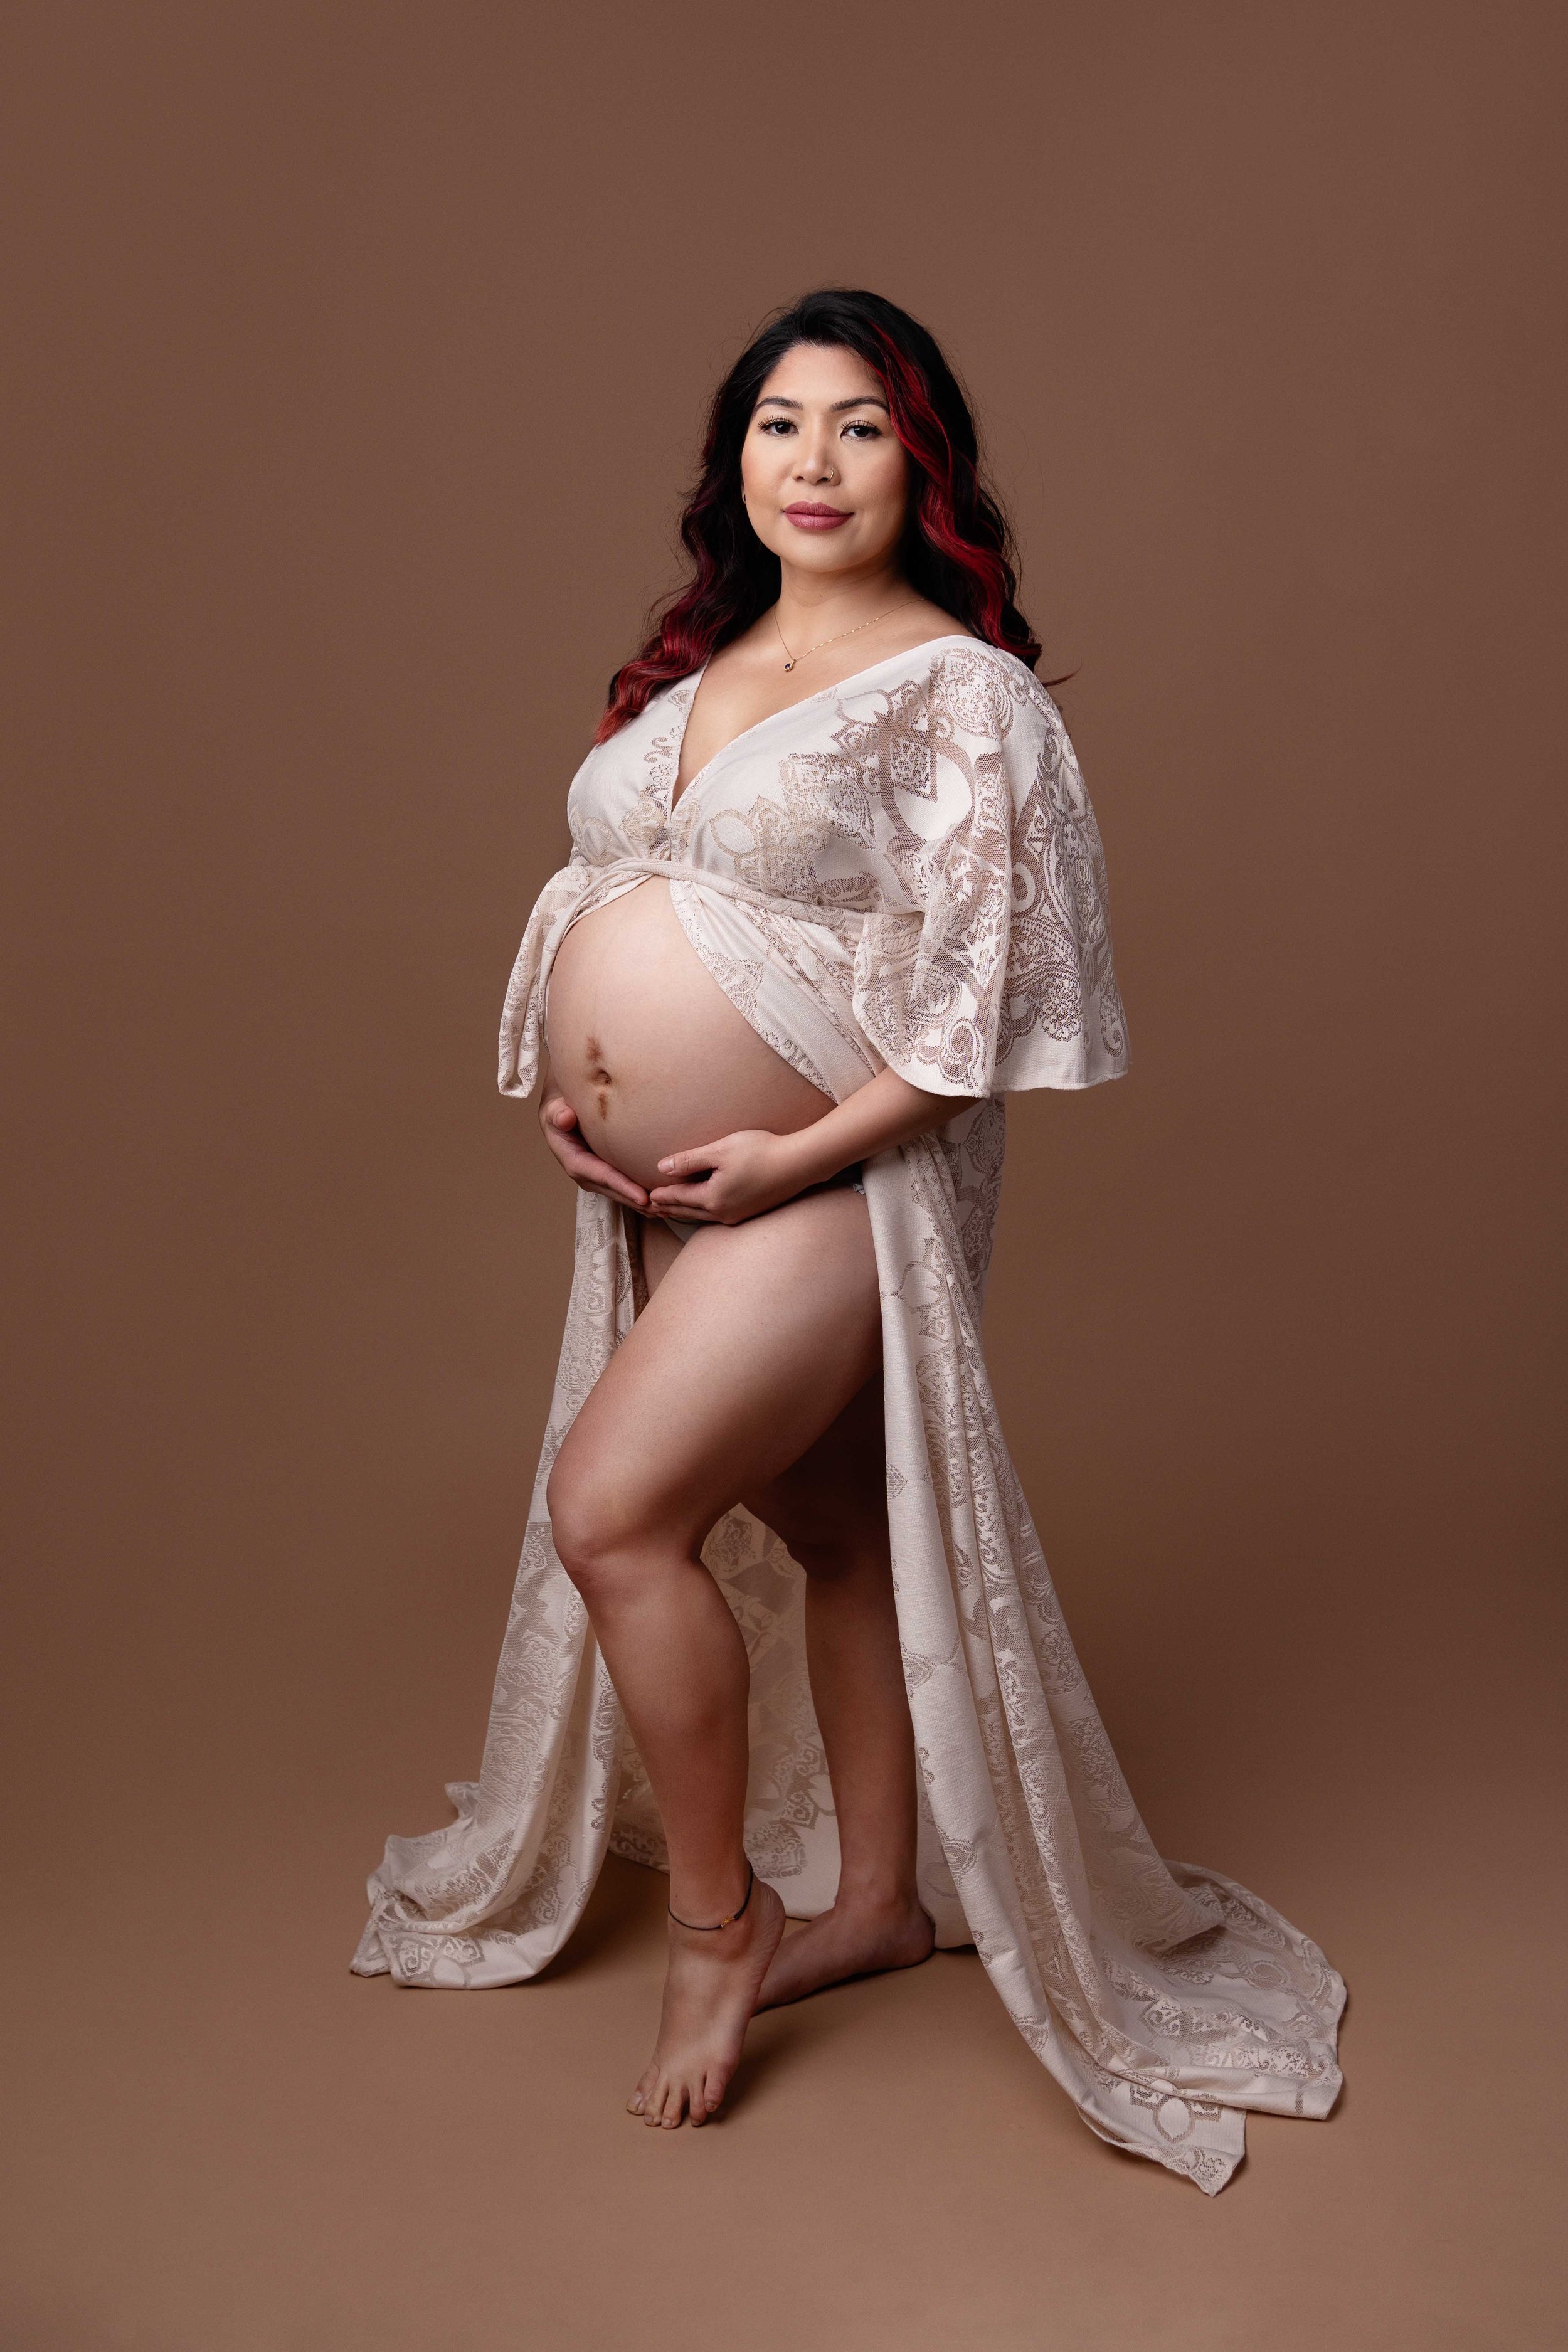 MATERNITY PHOTOSHOOT WOLVERHAMPTON - MATERNITY PHOTOSHOOT NEAR ME - PREGNANCY PHOTOSHOOT NEAR ME - LEA COOPER PHOTOGRAPHY - pregnancy photoshoot telford .jpg